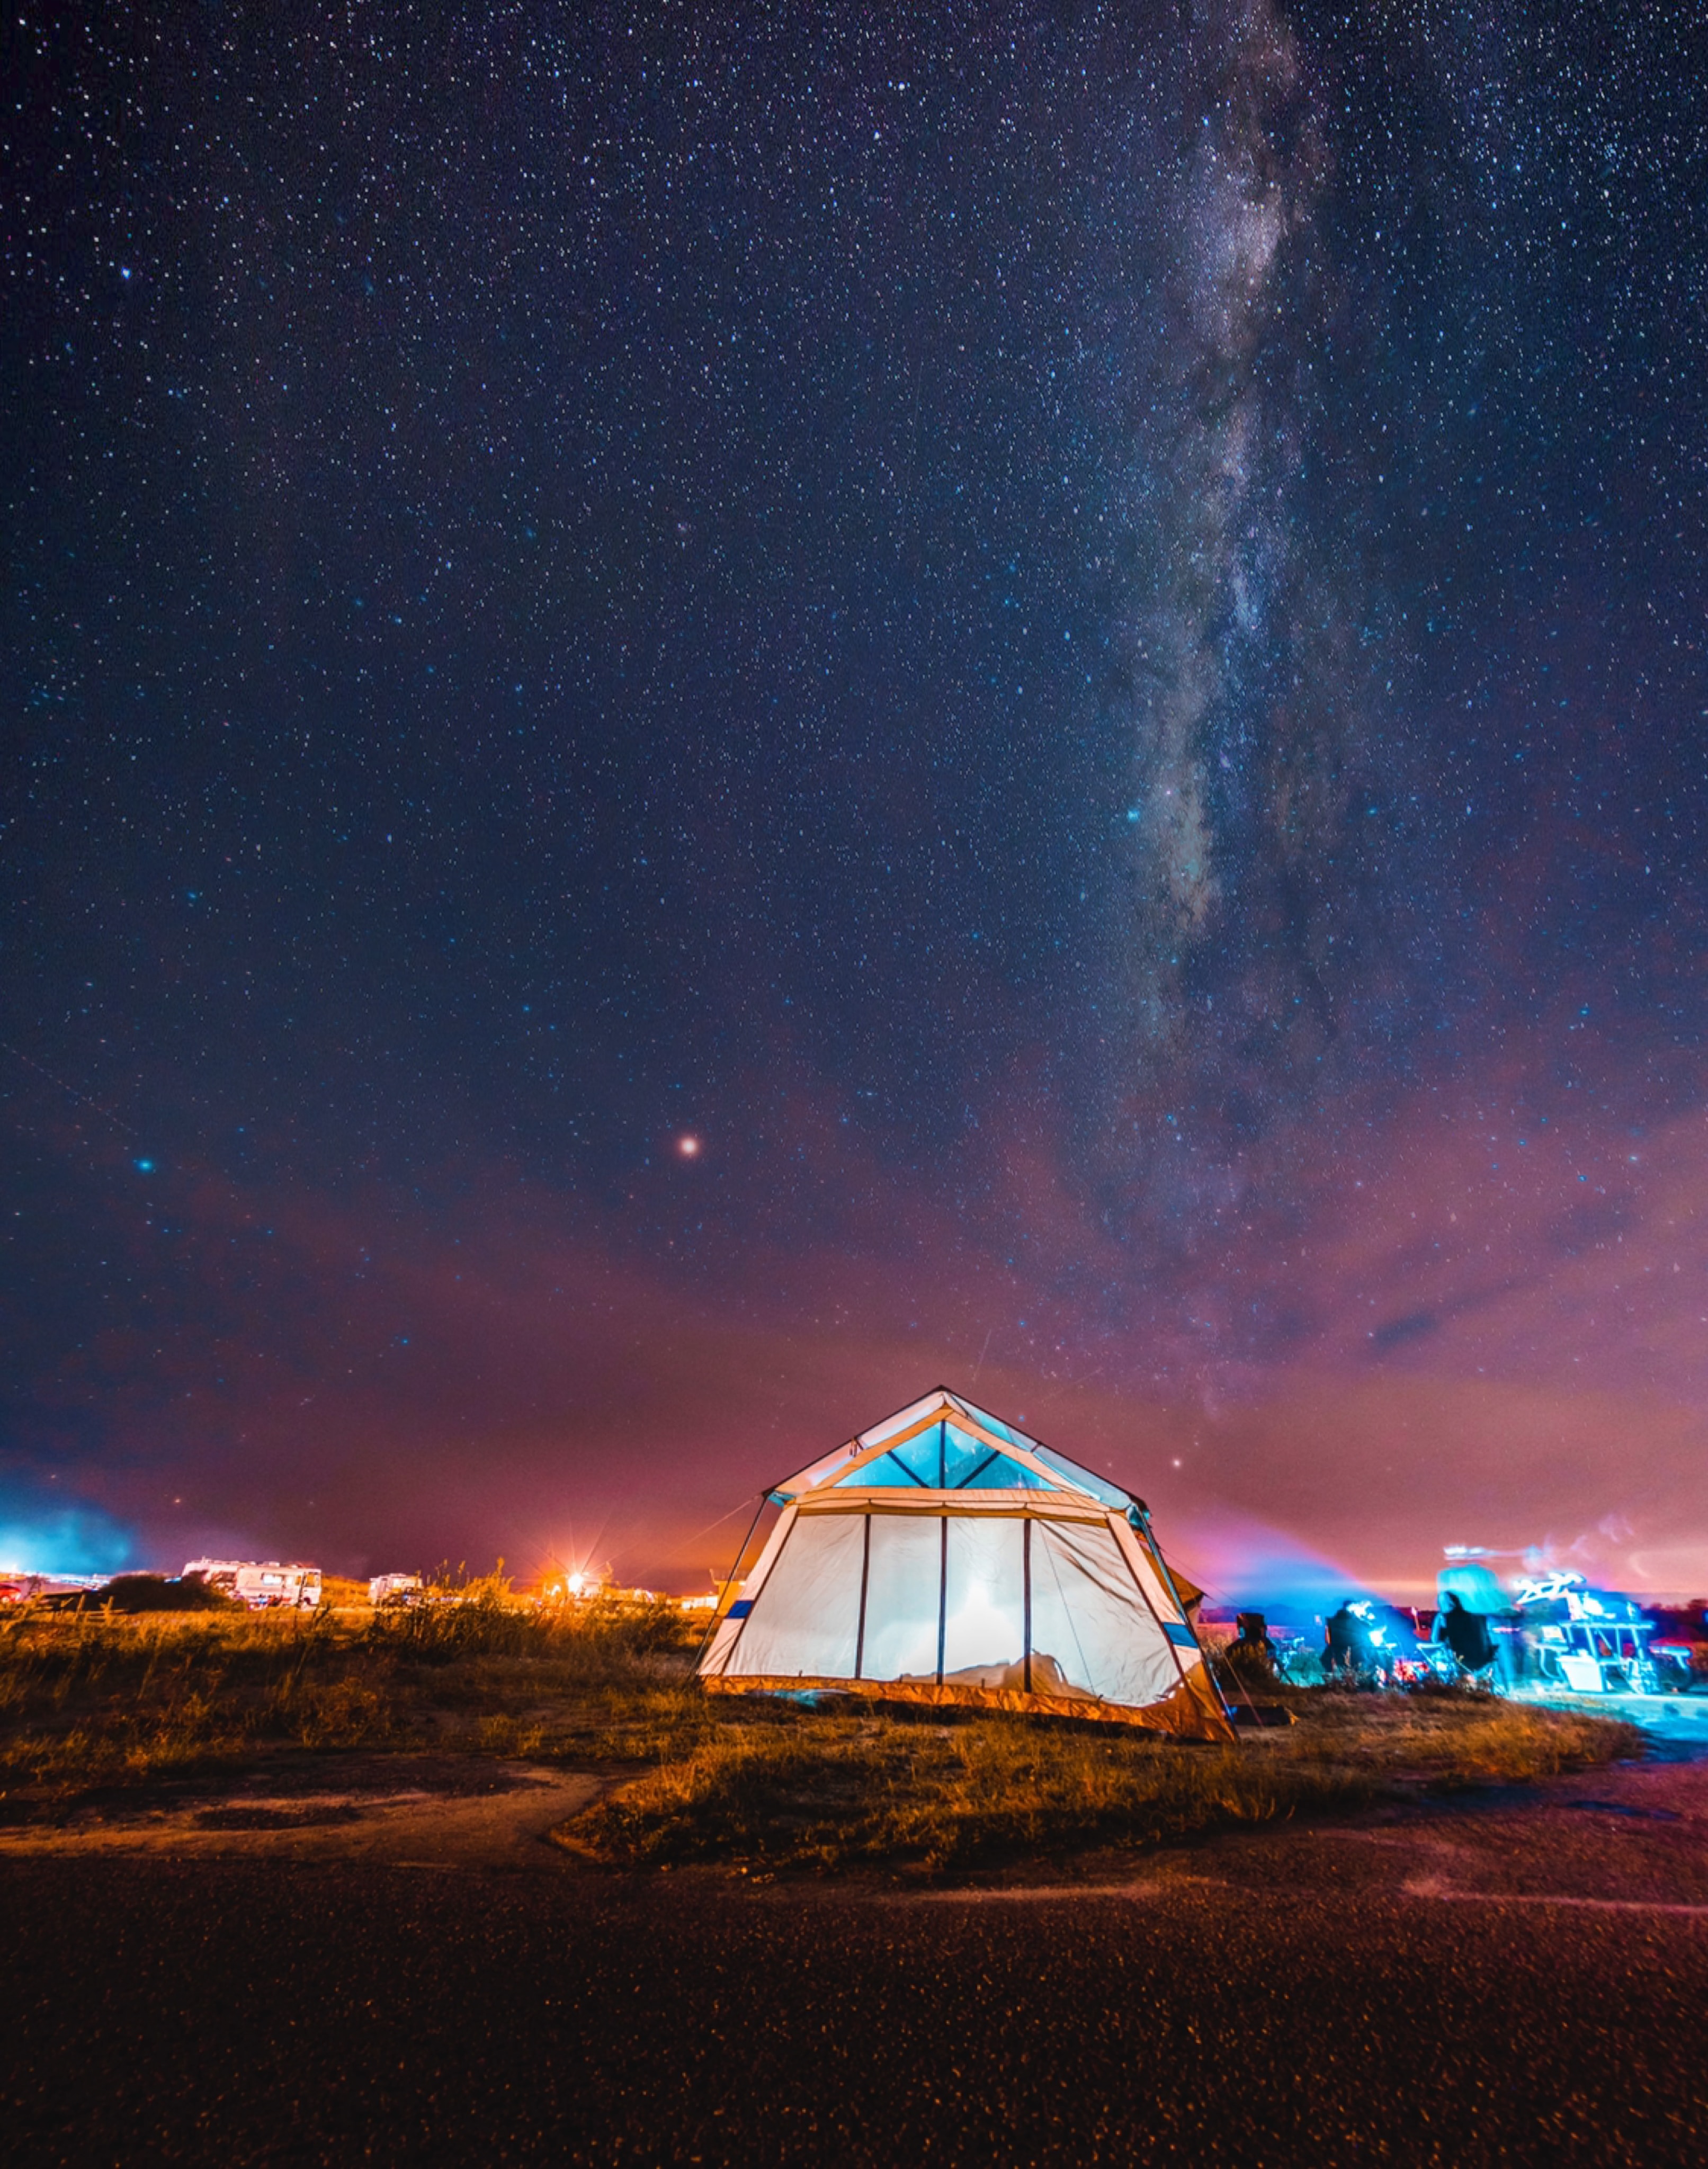 campsite, night, miscellanea, miscellaneous, starry sky, tent, camping